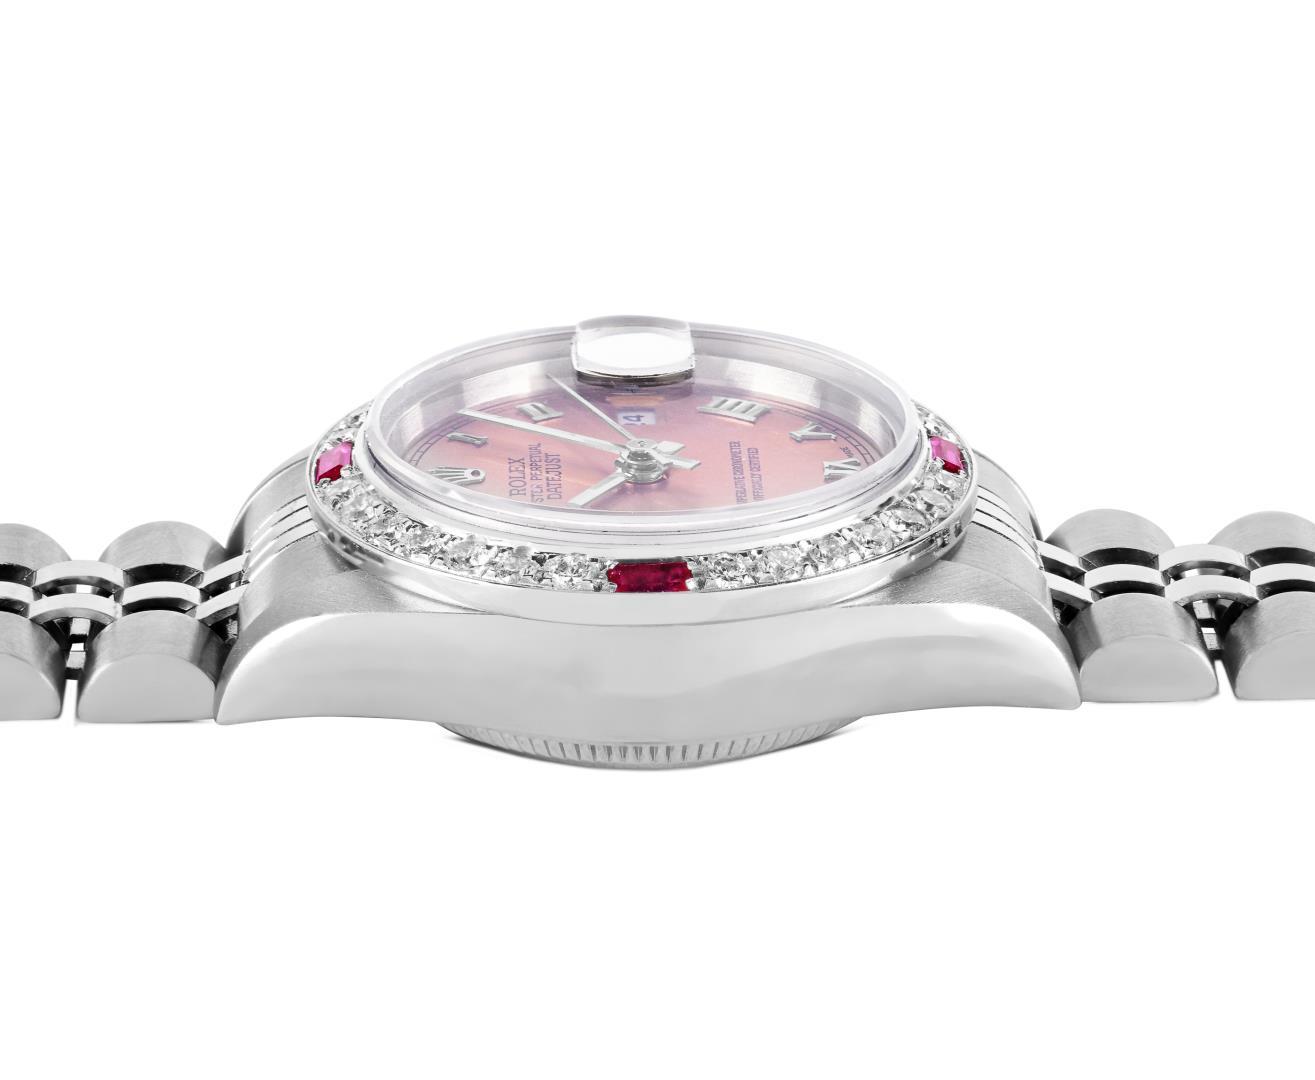 Rolex Ladies Stainless Steel Salmon Roman Ruby and Diamond Datejust Wristwatch